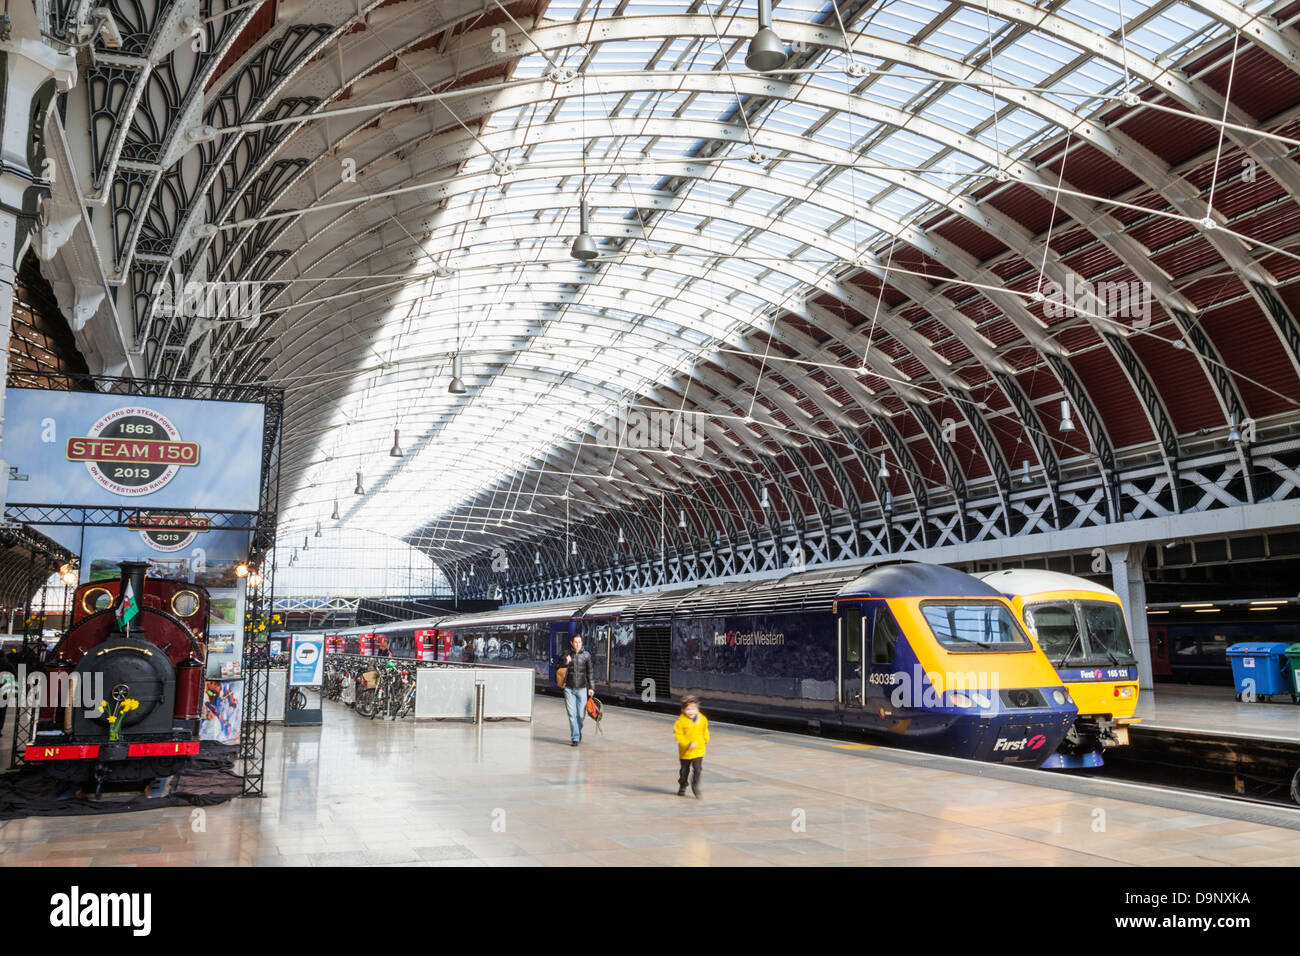 England, London, Paddington Station, Station Interieur und Züge Stockfoto